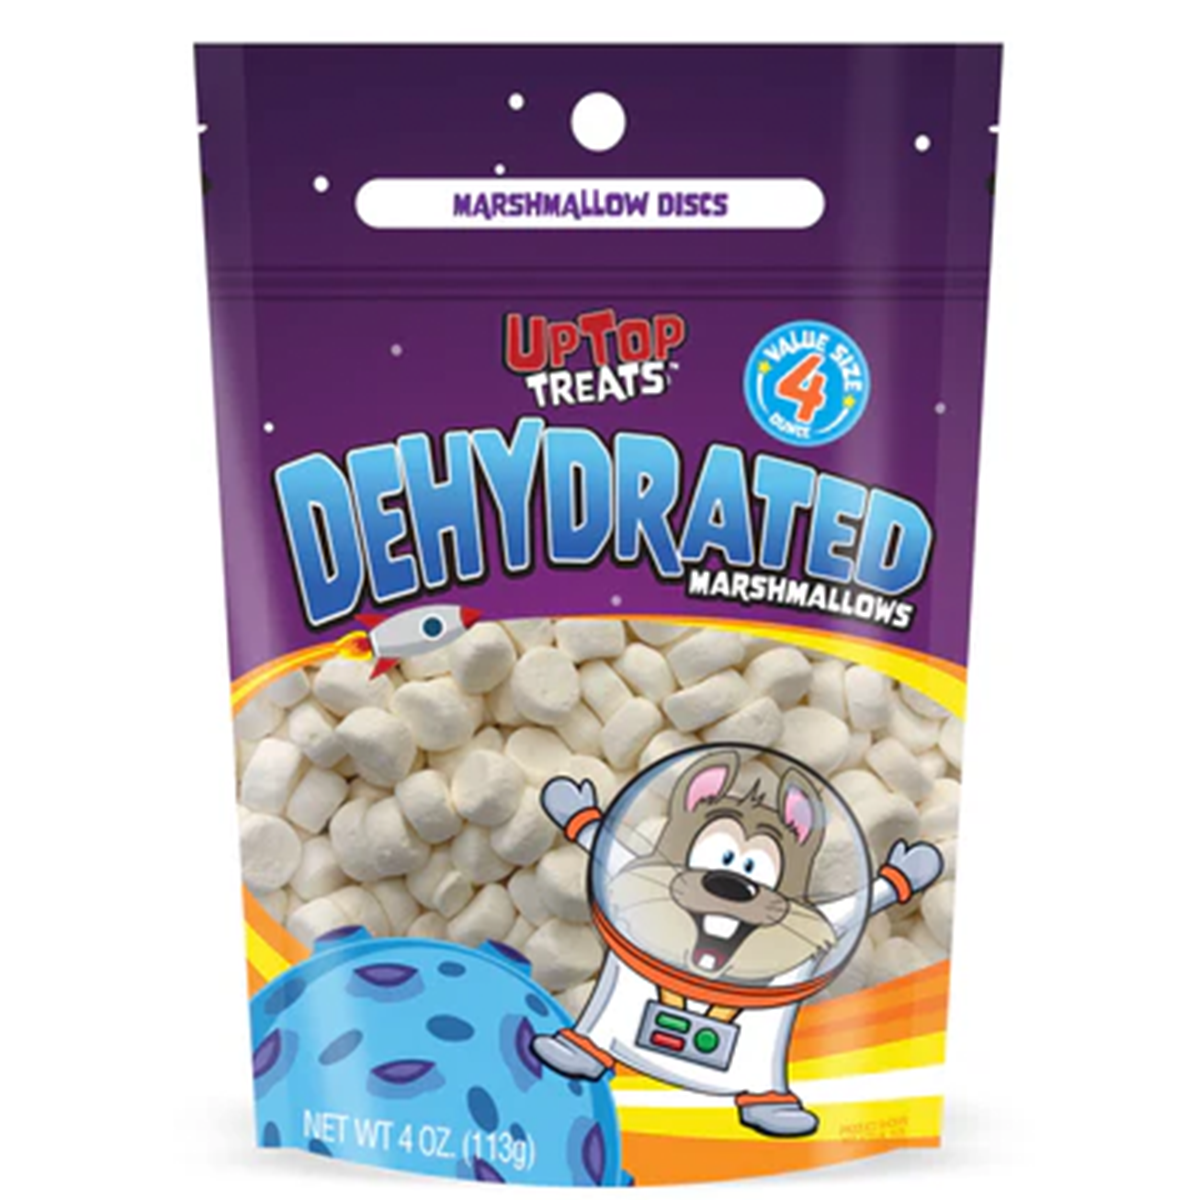 UpTop Treats Dehydrated Marshmallow Discs